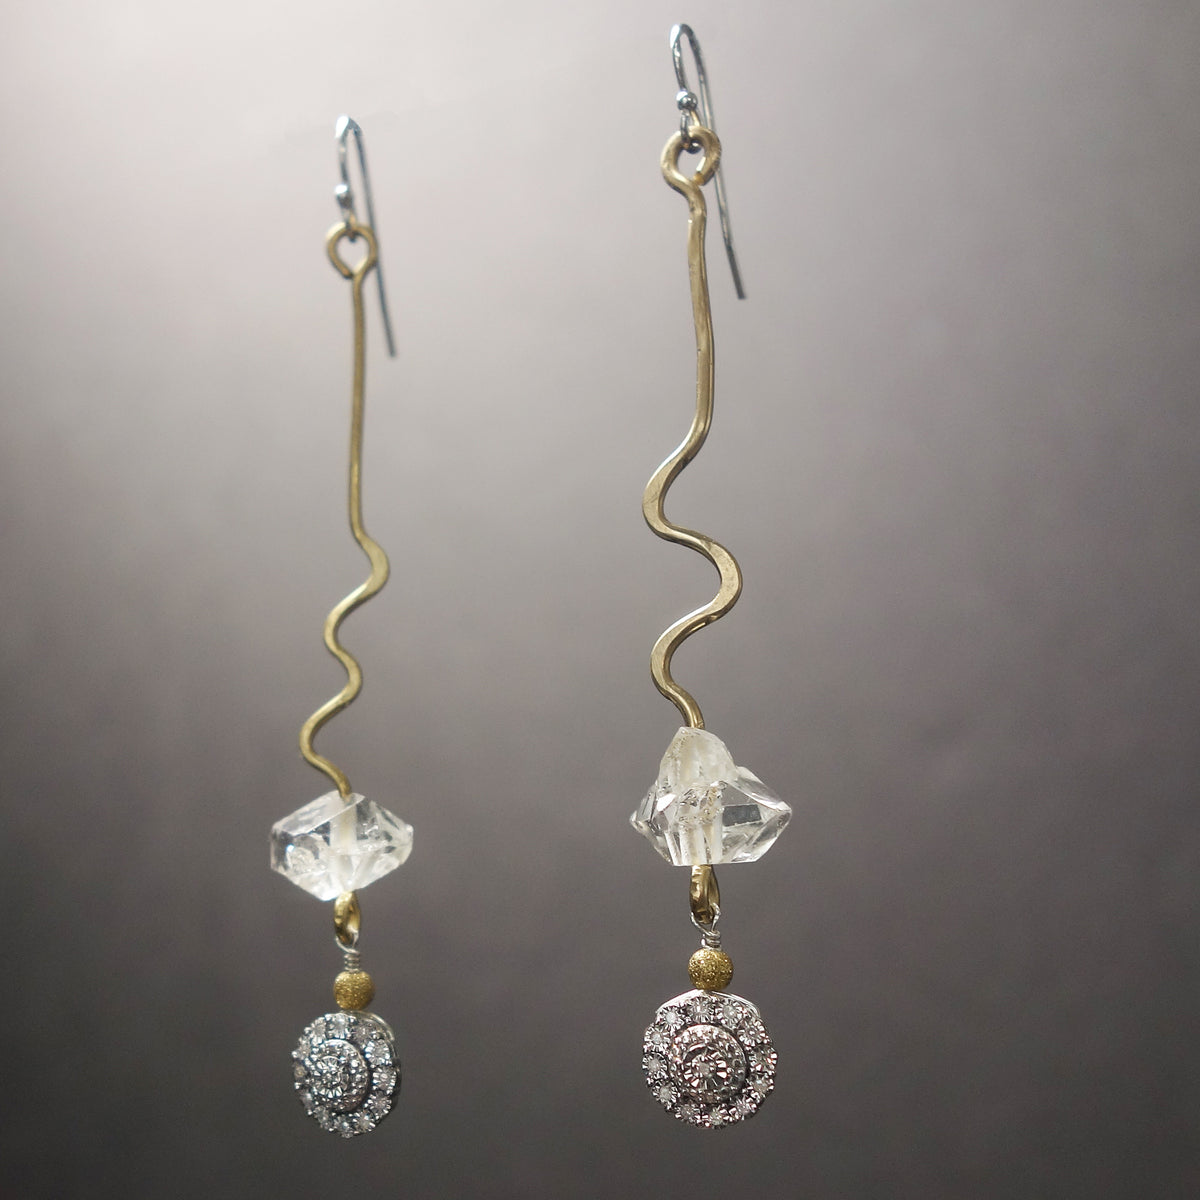 Diamond, hammered Gold, Clear Quartz earrings